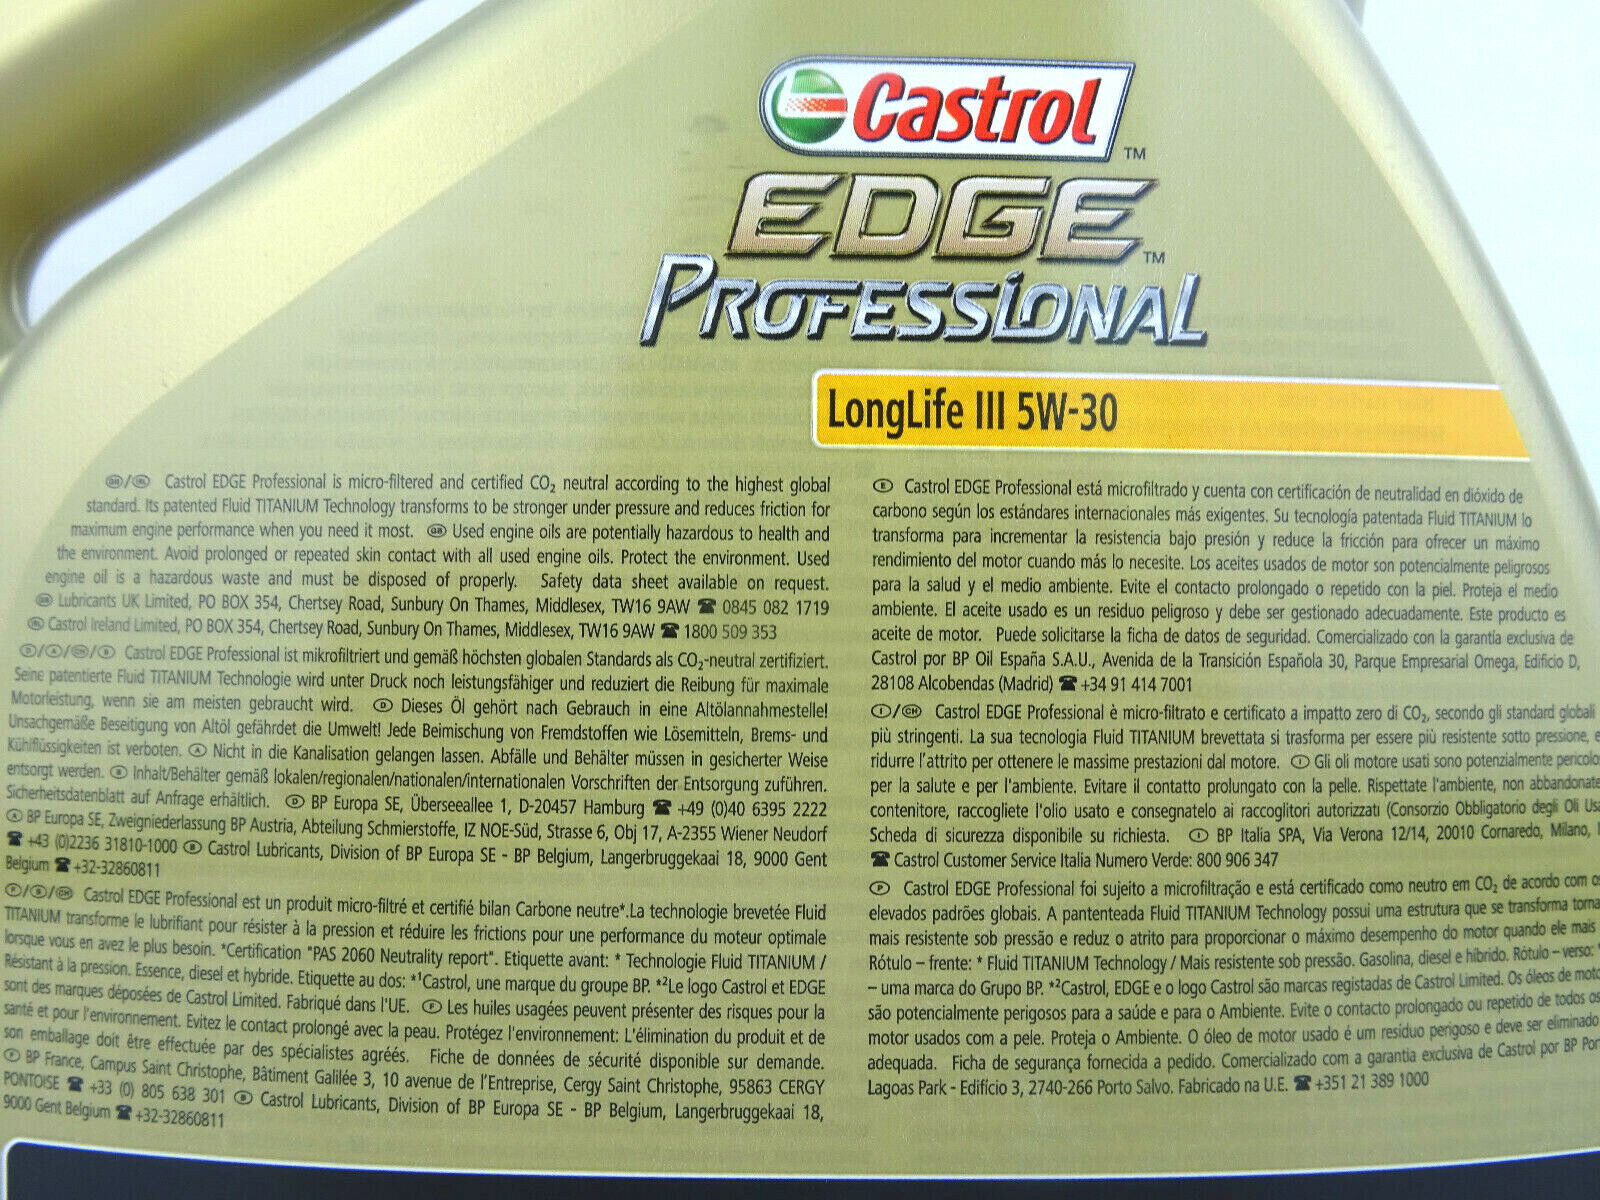 Castrol 5W30 Edge Professional Longlife 3 5W-30 ÖL VW 50400 50700 2x 4Liter NEU